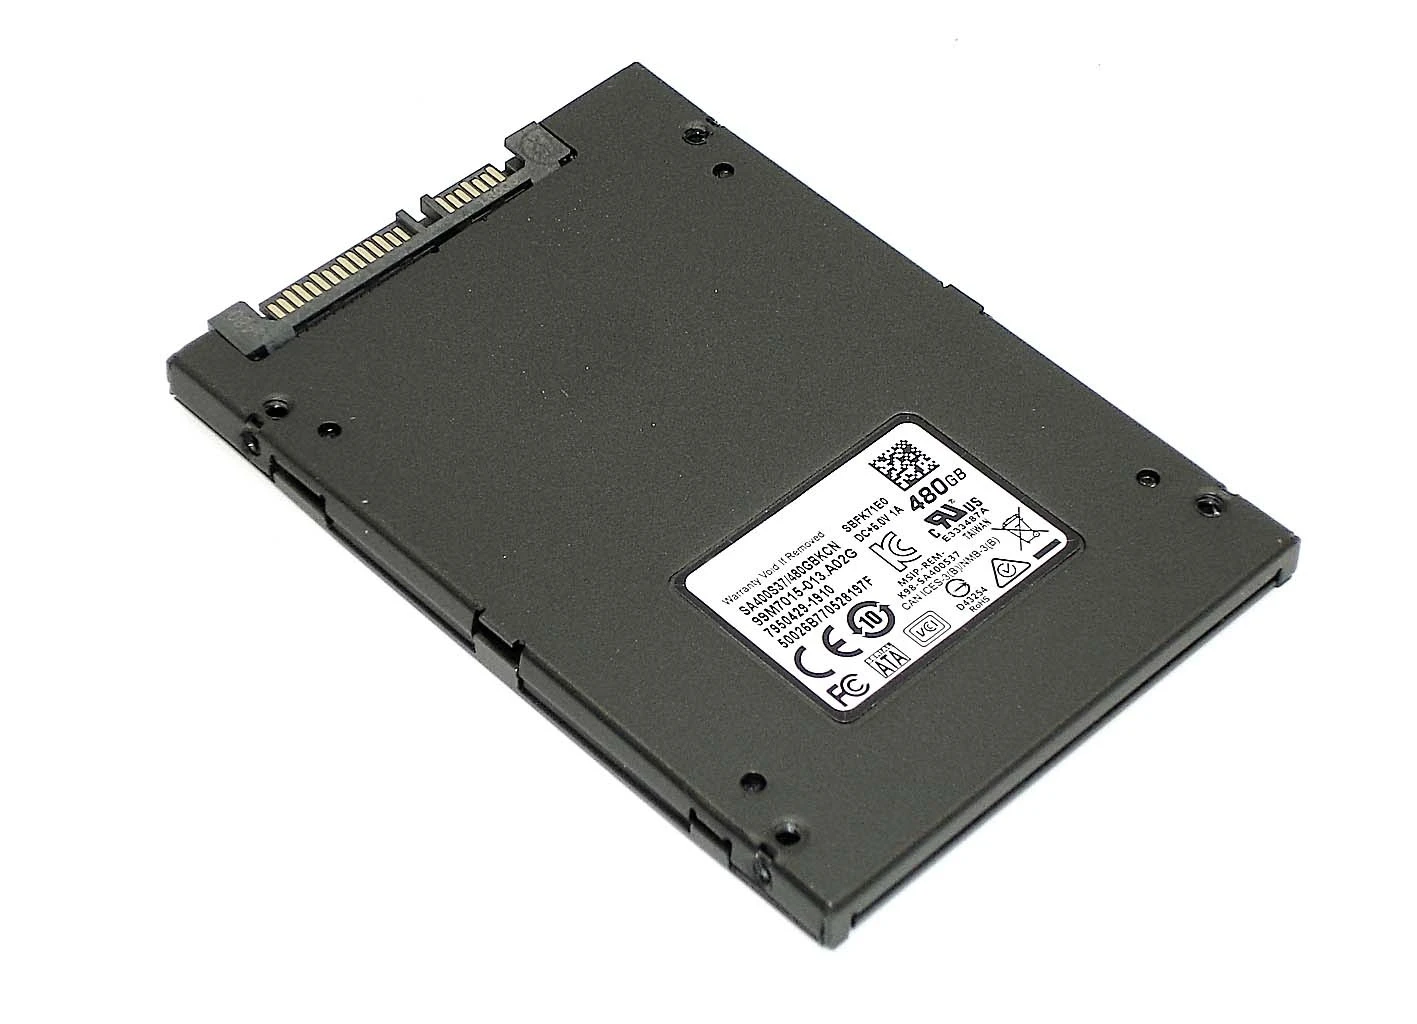 Apply Eve nut SSD Sata Kingston A400 480 GB sa400s37/480gbkcn|Laptop Repair Components| -  AliExpress